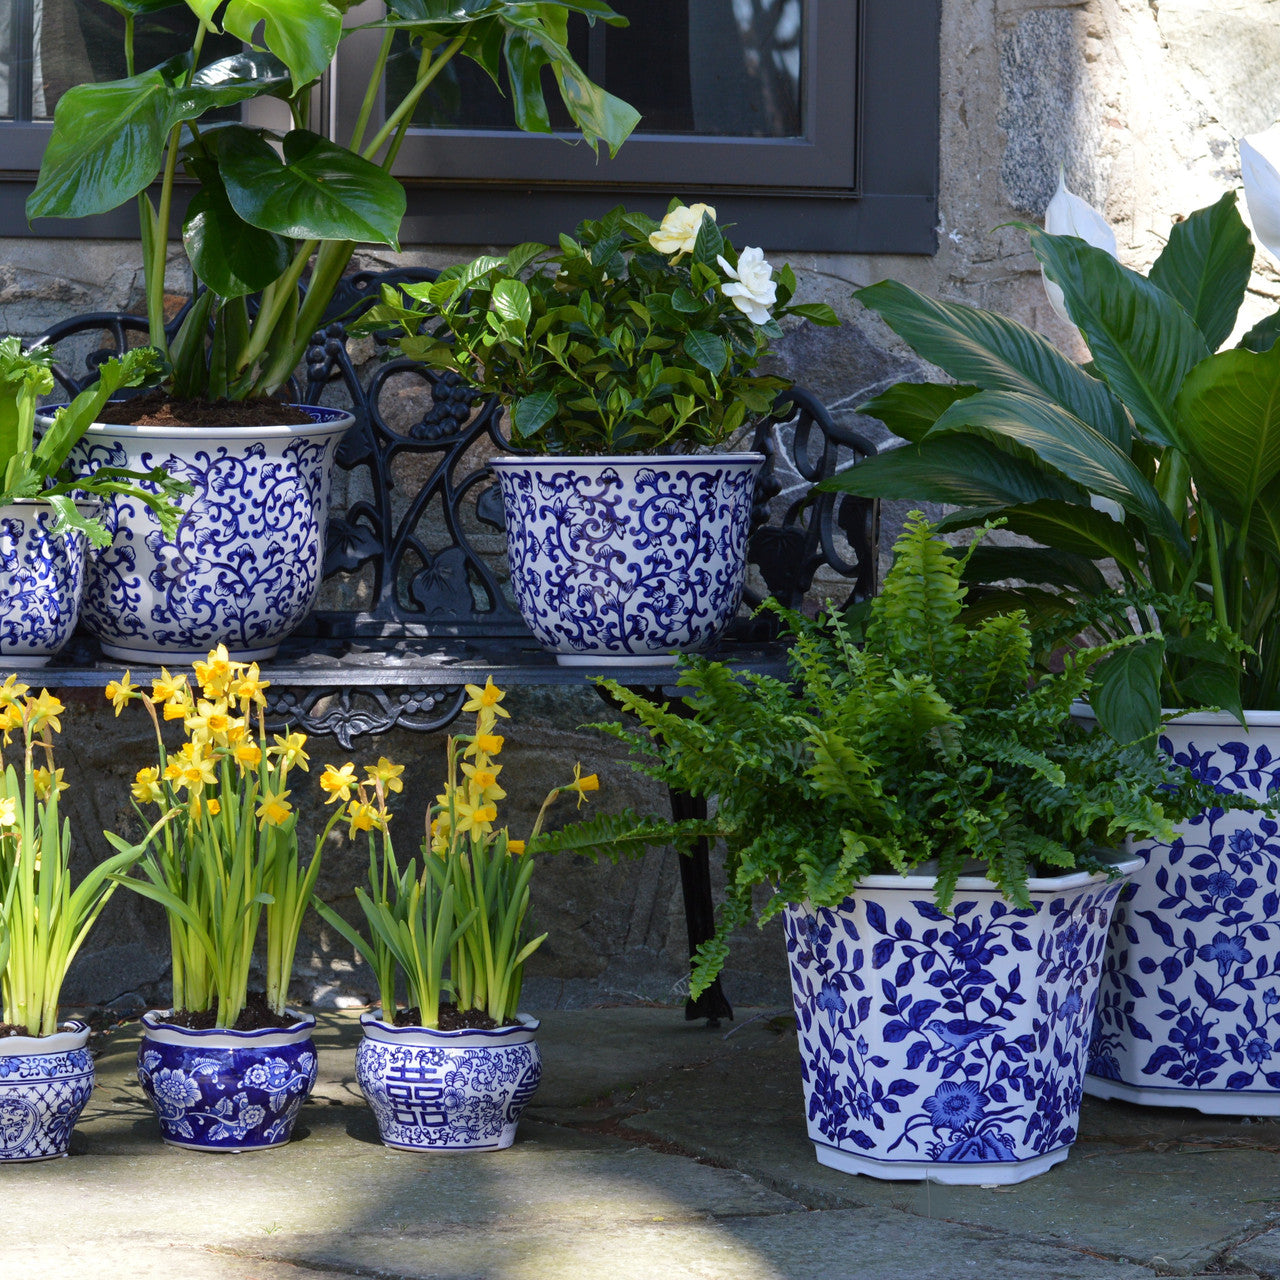 Blue and White Aviary Garden Planter - Large - Euro Ceramica 